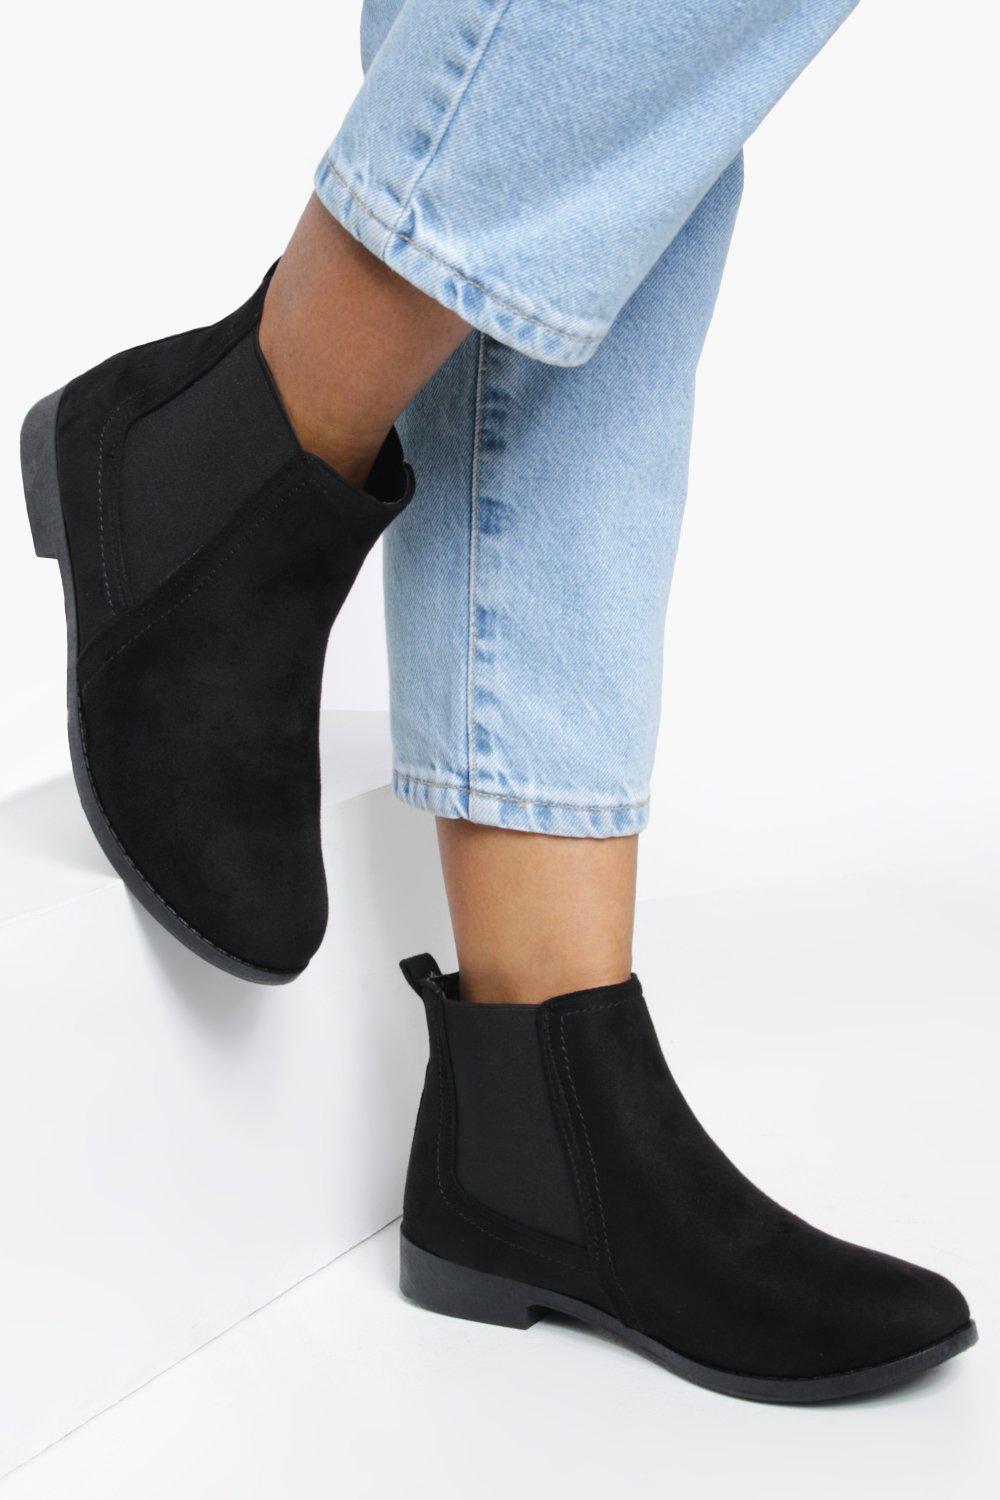 flat black suede chelsea boots